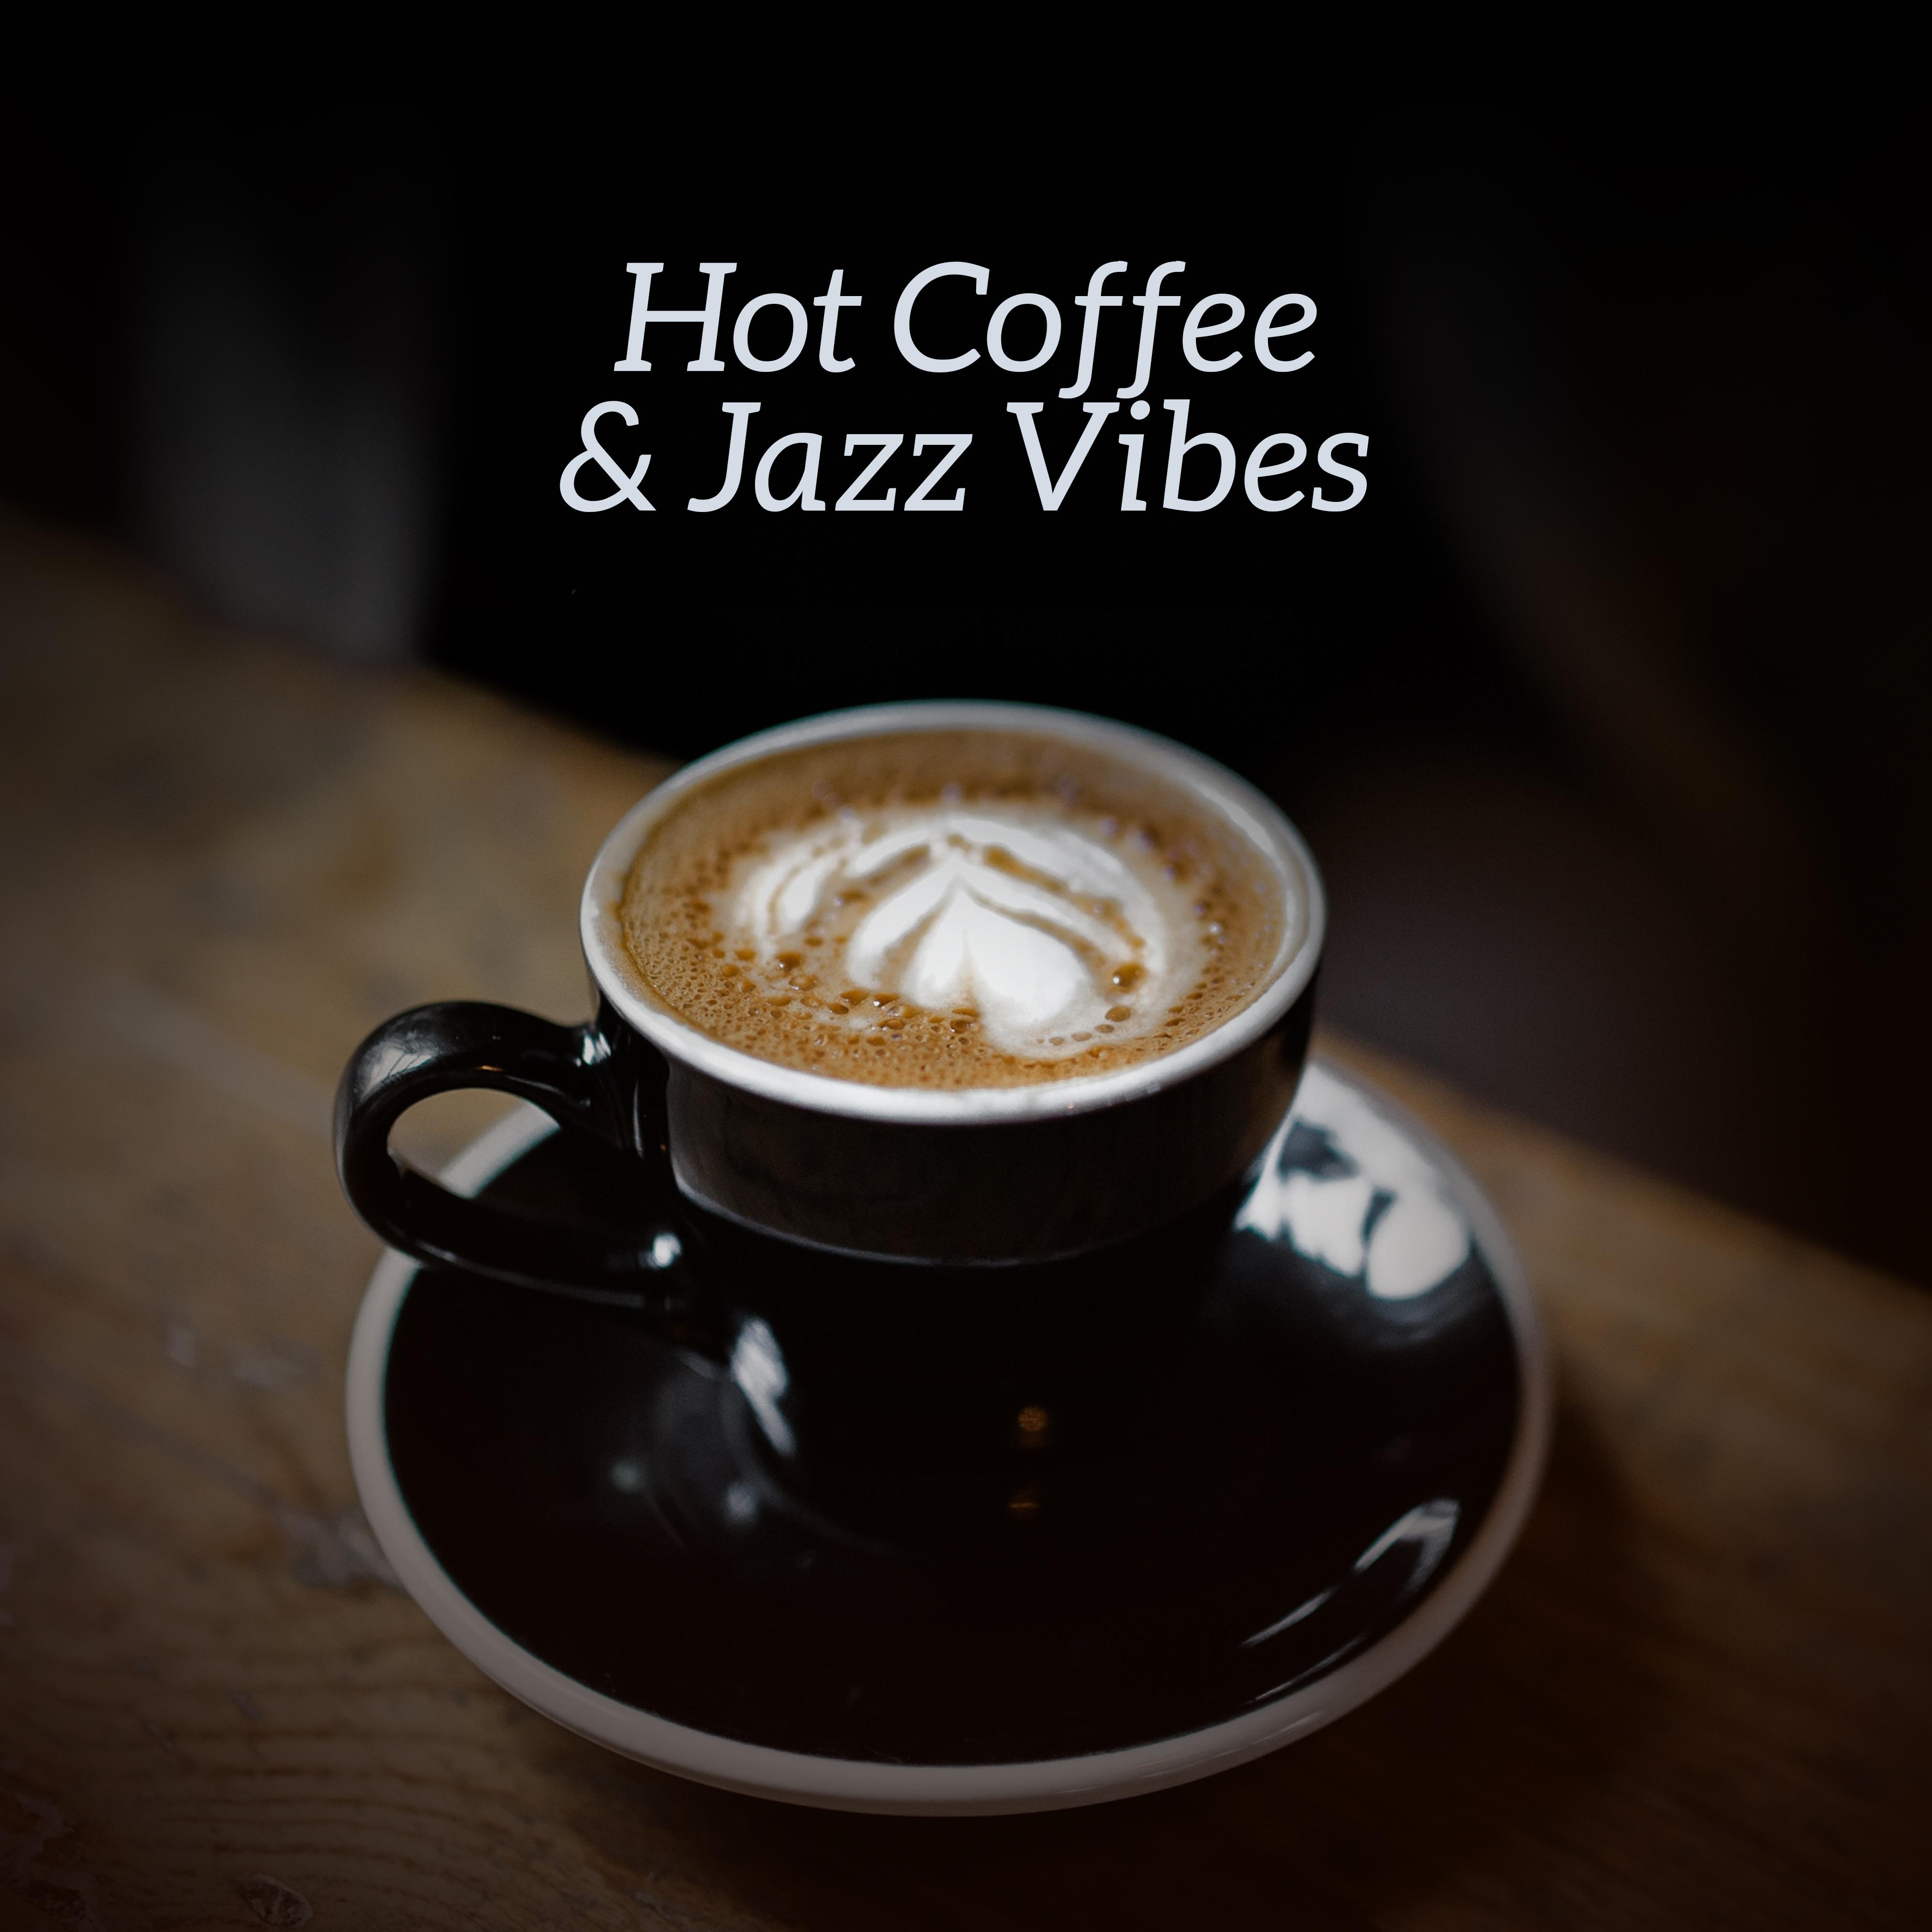 Hot Coffee & Jazz Vibes